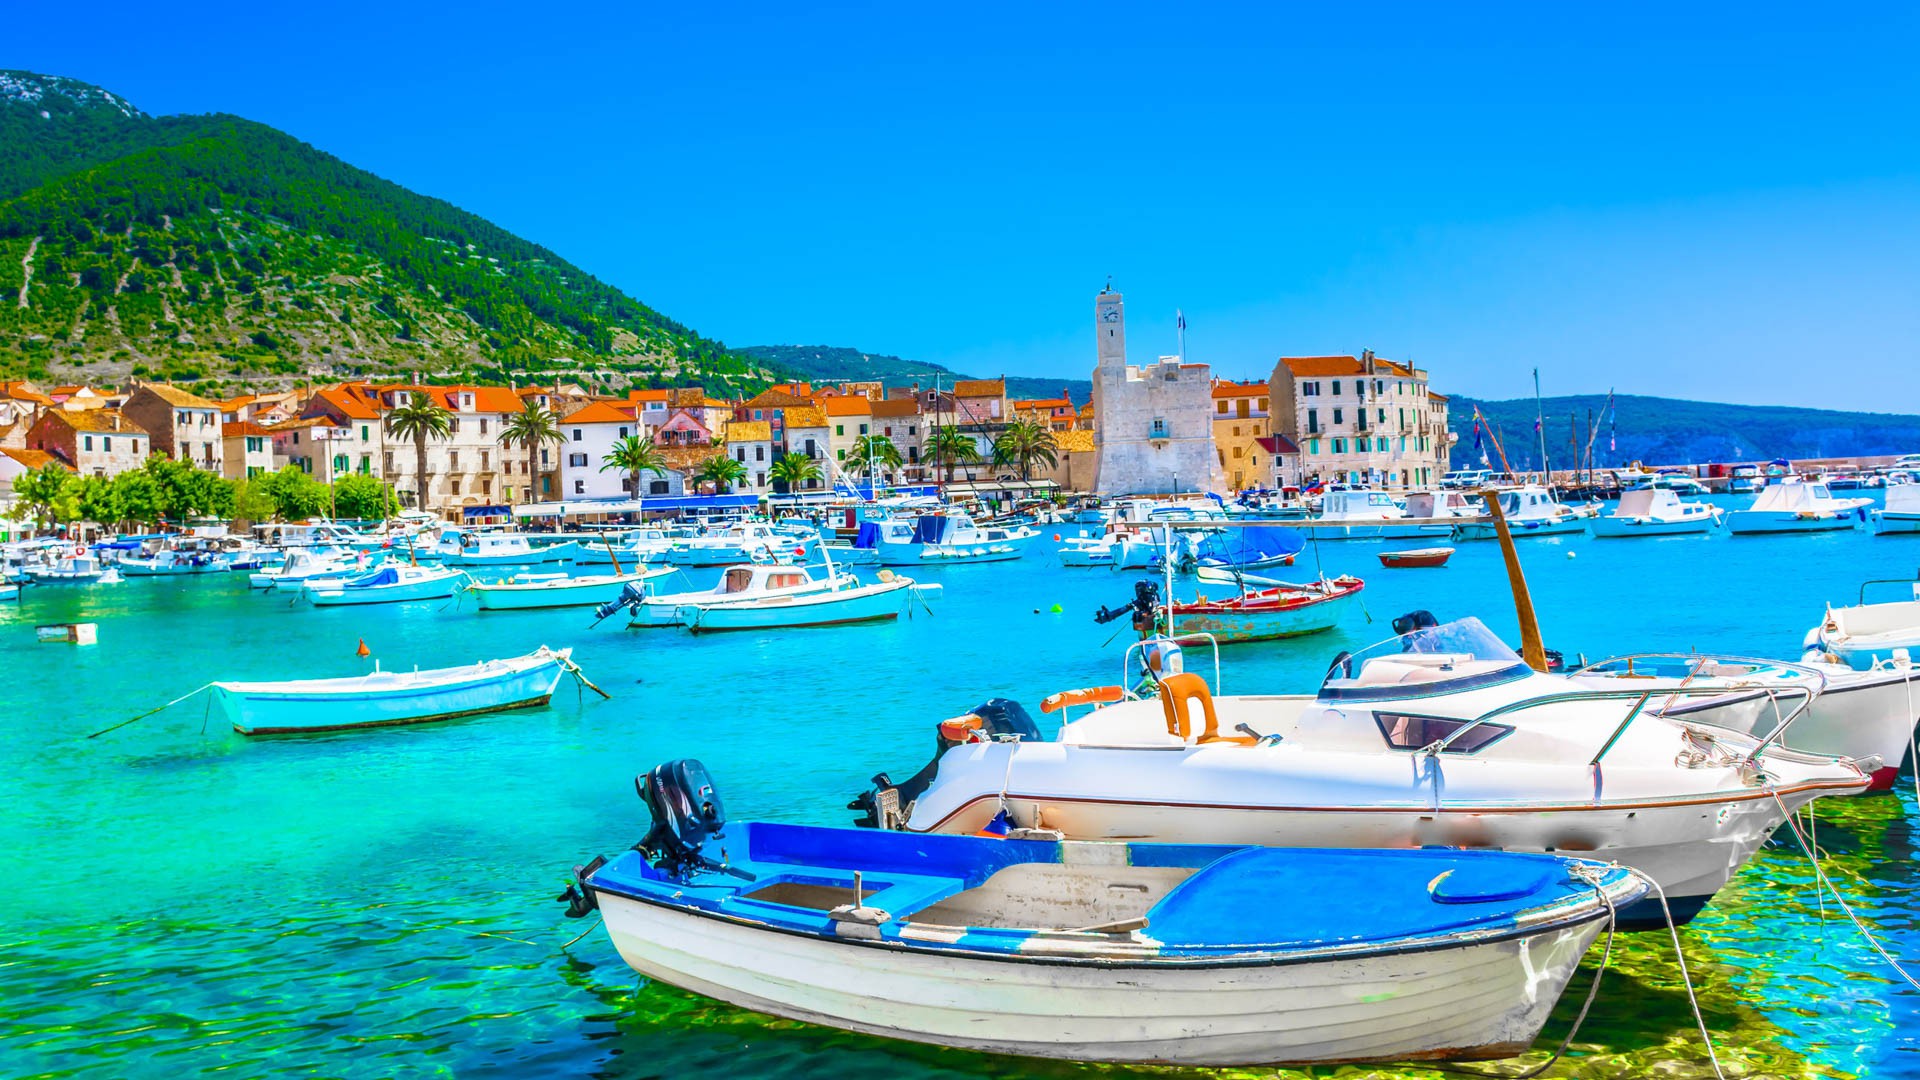 Vis - Adriatic Sea | Croatia Cruise Croatia Cruise